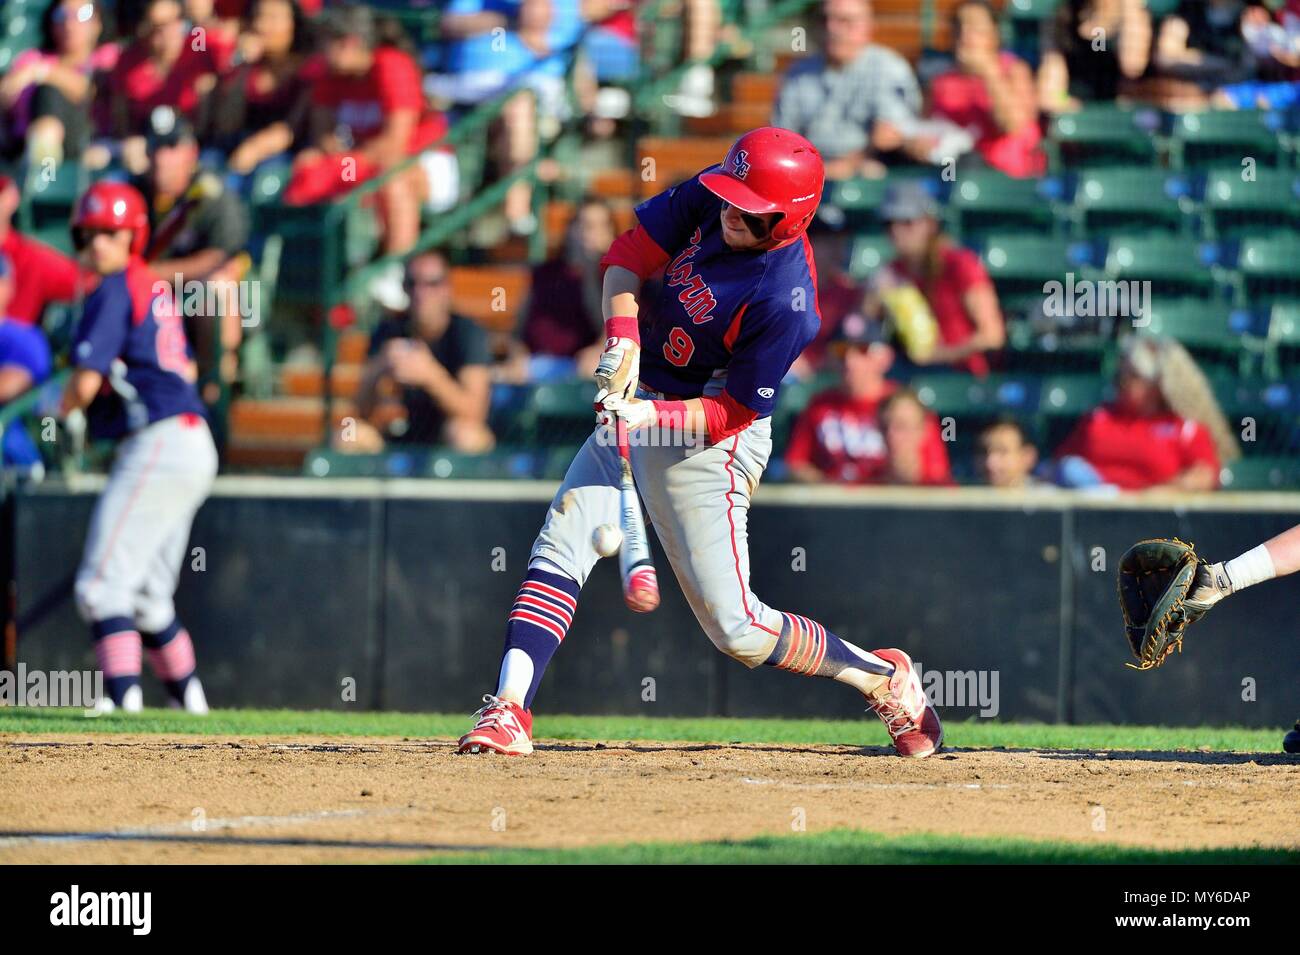 Hitter making solid contact as bat meets ball. USA. Stock Photo